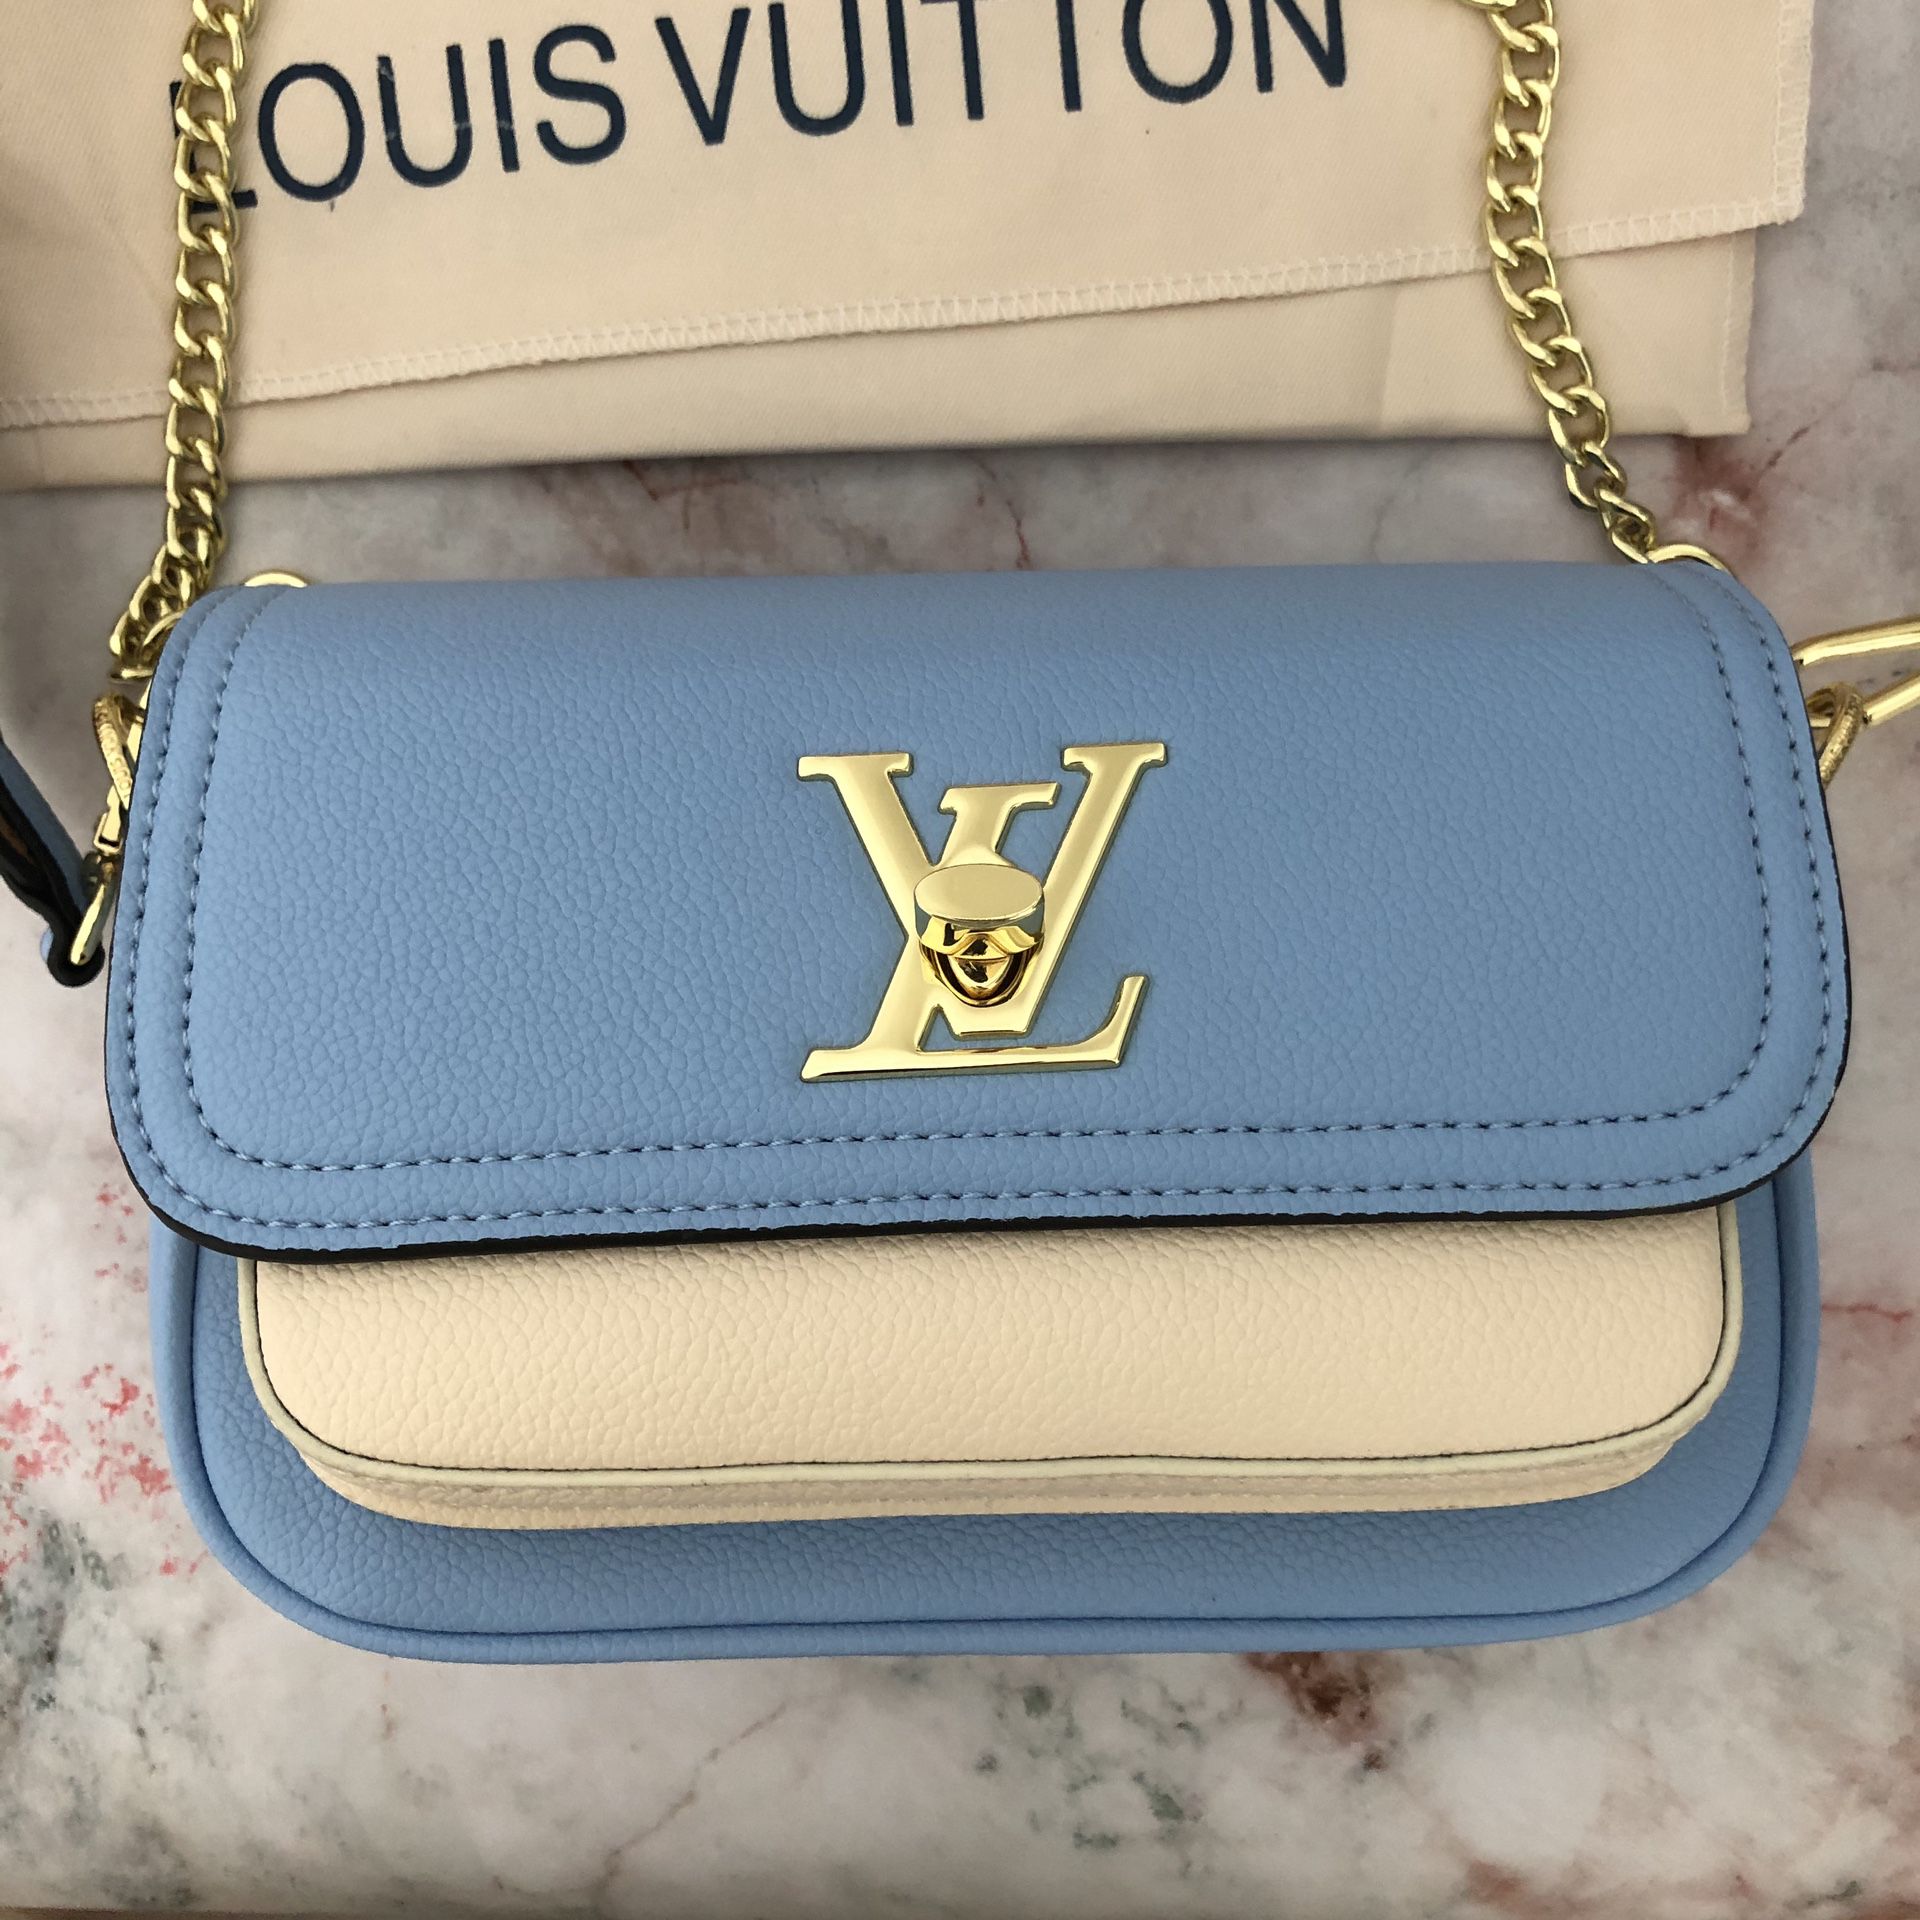 Authentic Louis Vuitton Blue Embossed Grained Calfskin Shoulder Bag for  Sale in Nashville, TN - OfferUp